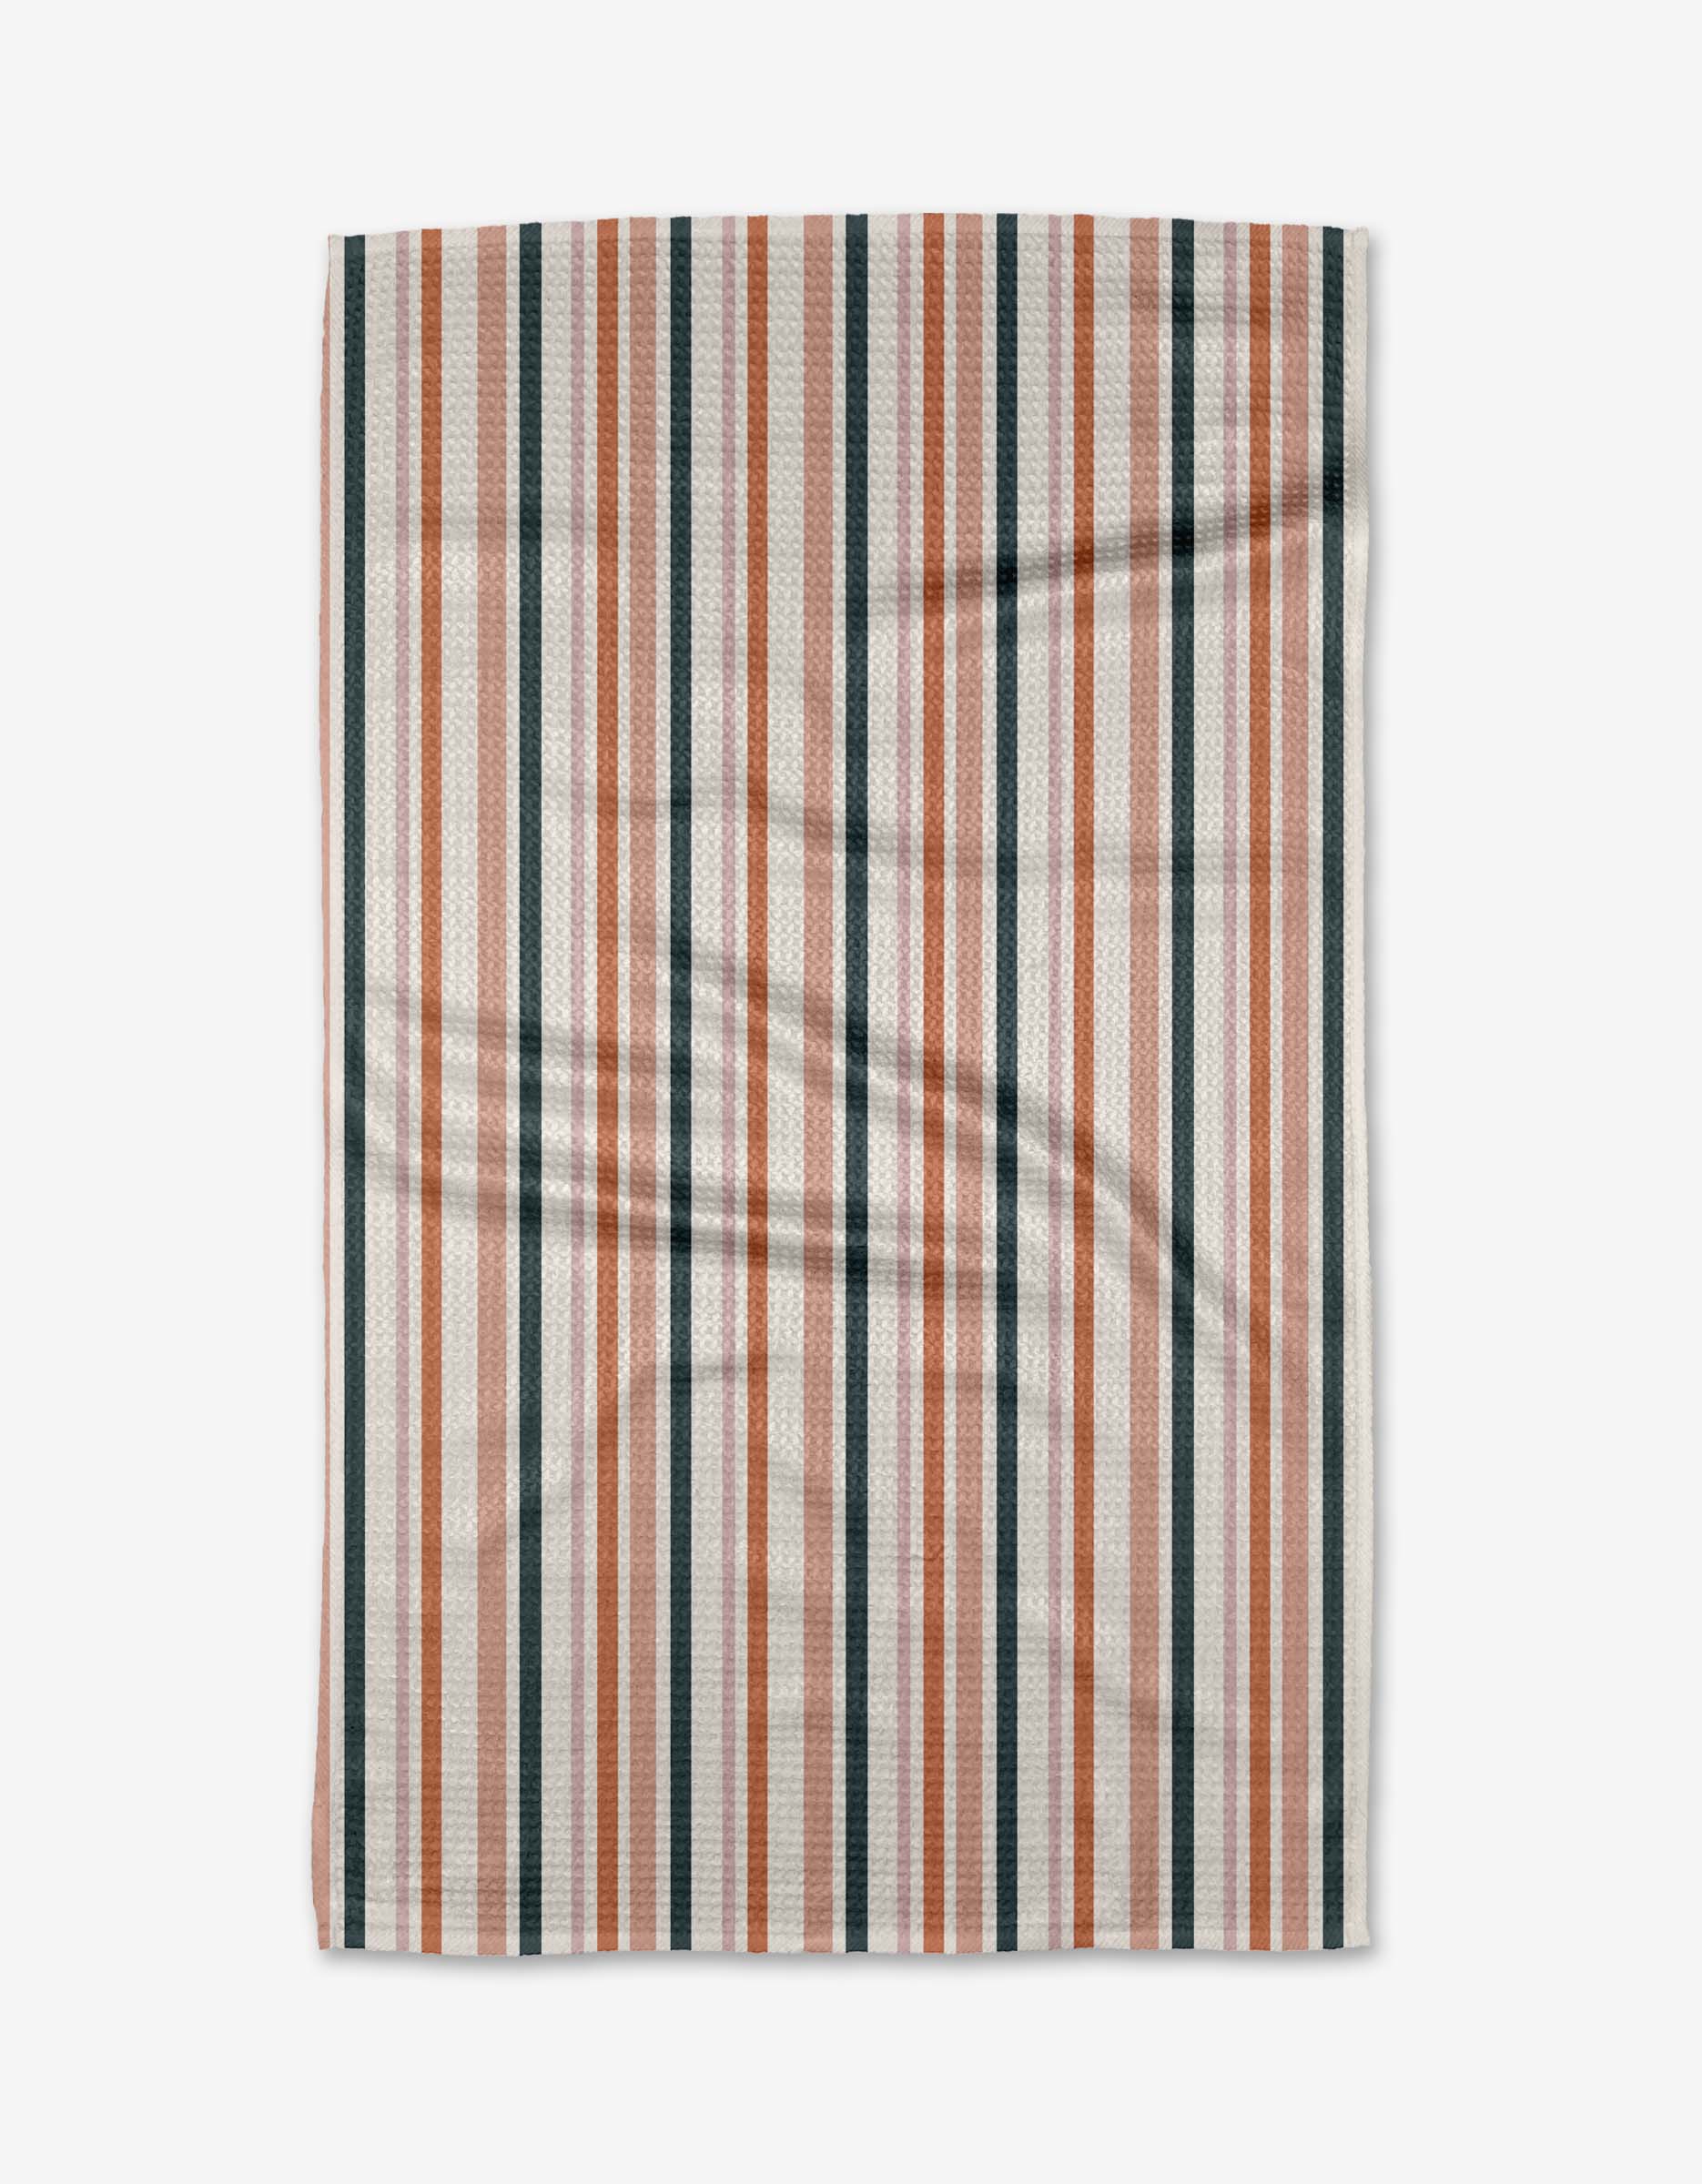 Stripes For Days